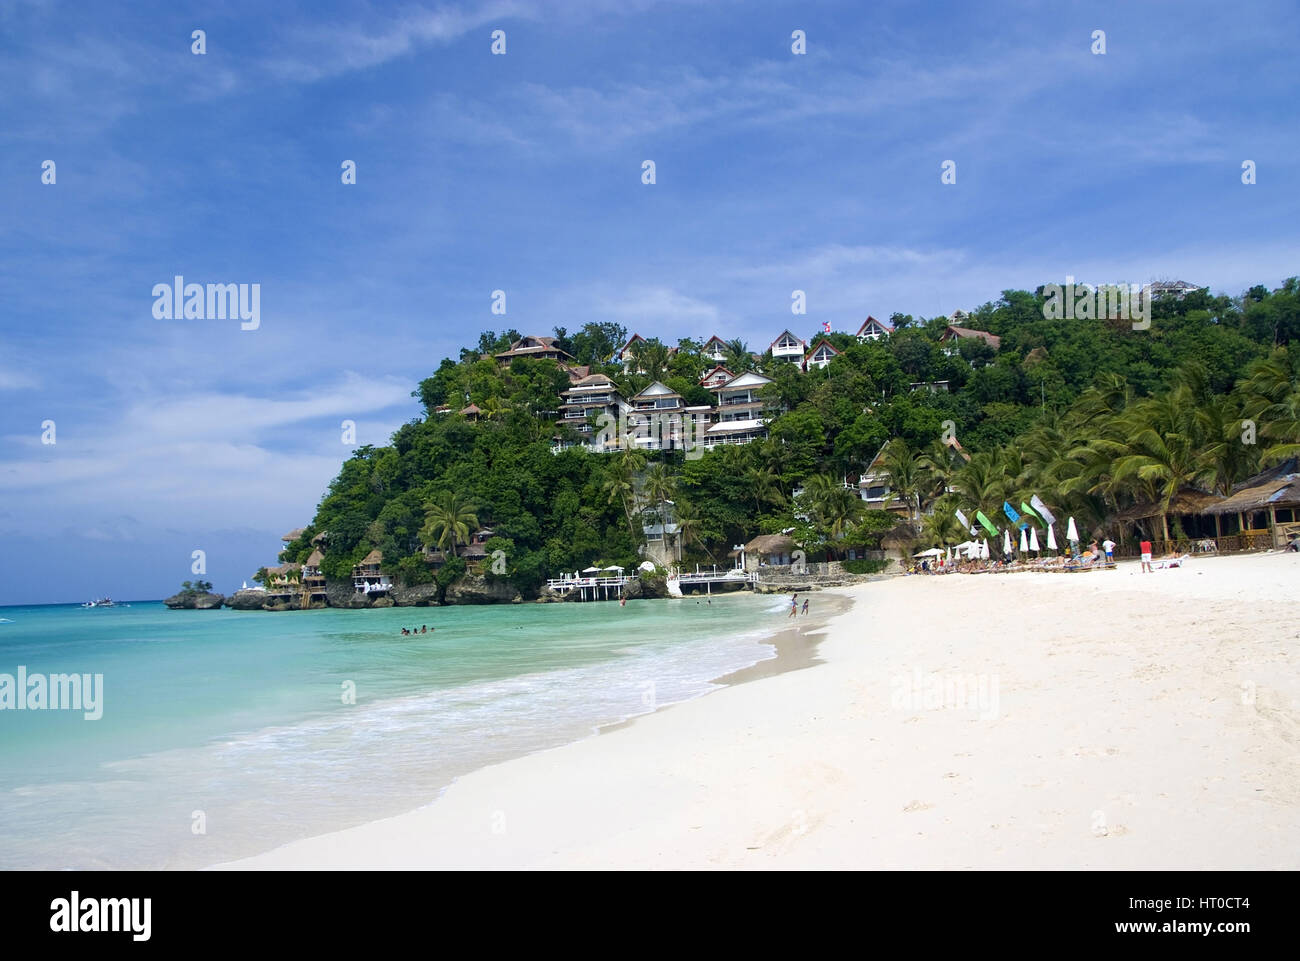 Dinivid-Beach auf Boracay, Philippinen - Dinivid Beach, Boracay, Philippines Stock Photo